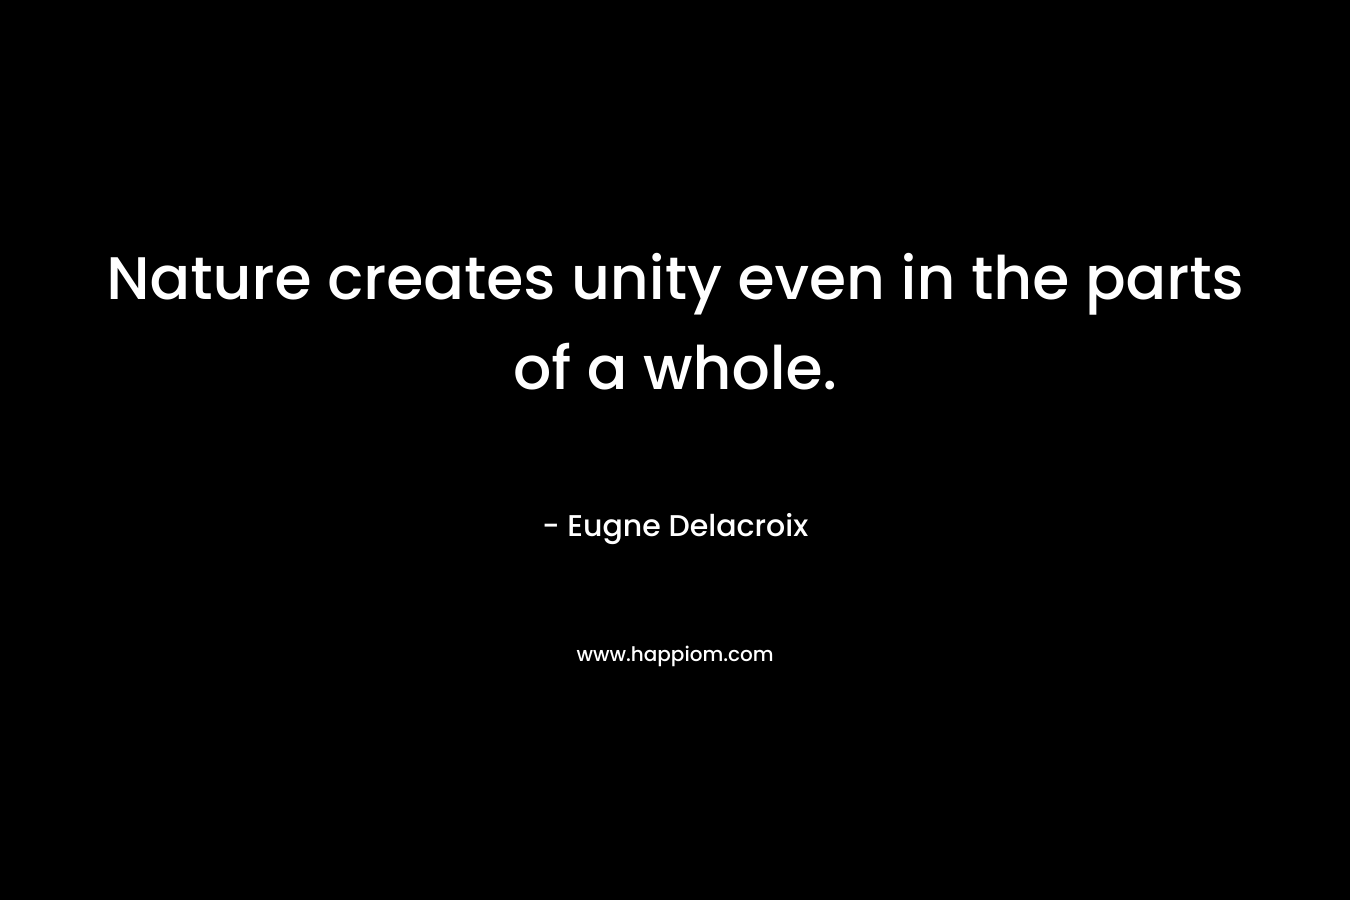 Nature creates unity even in the parts of a whole. – Eugne Delacroix